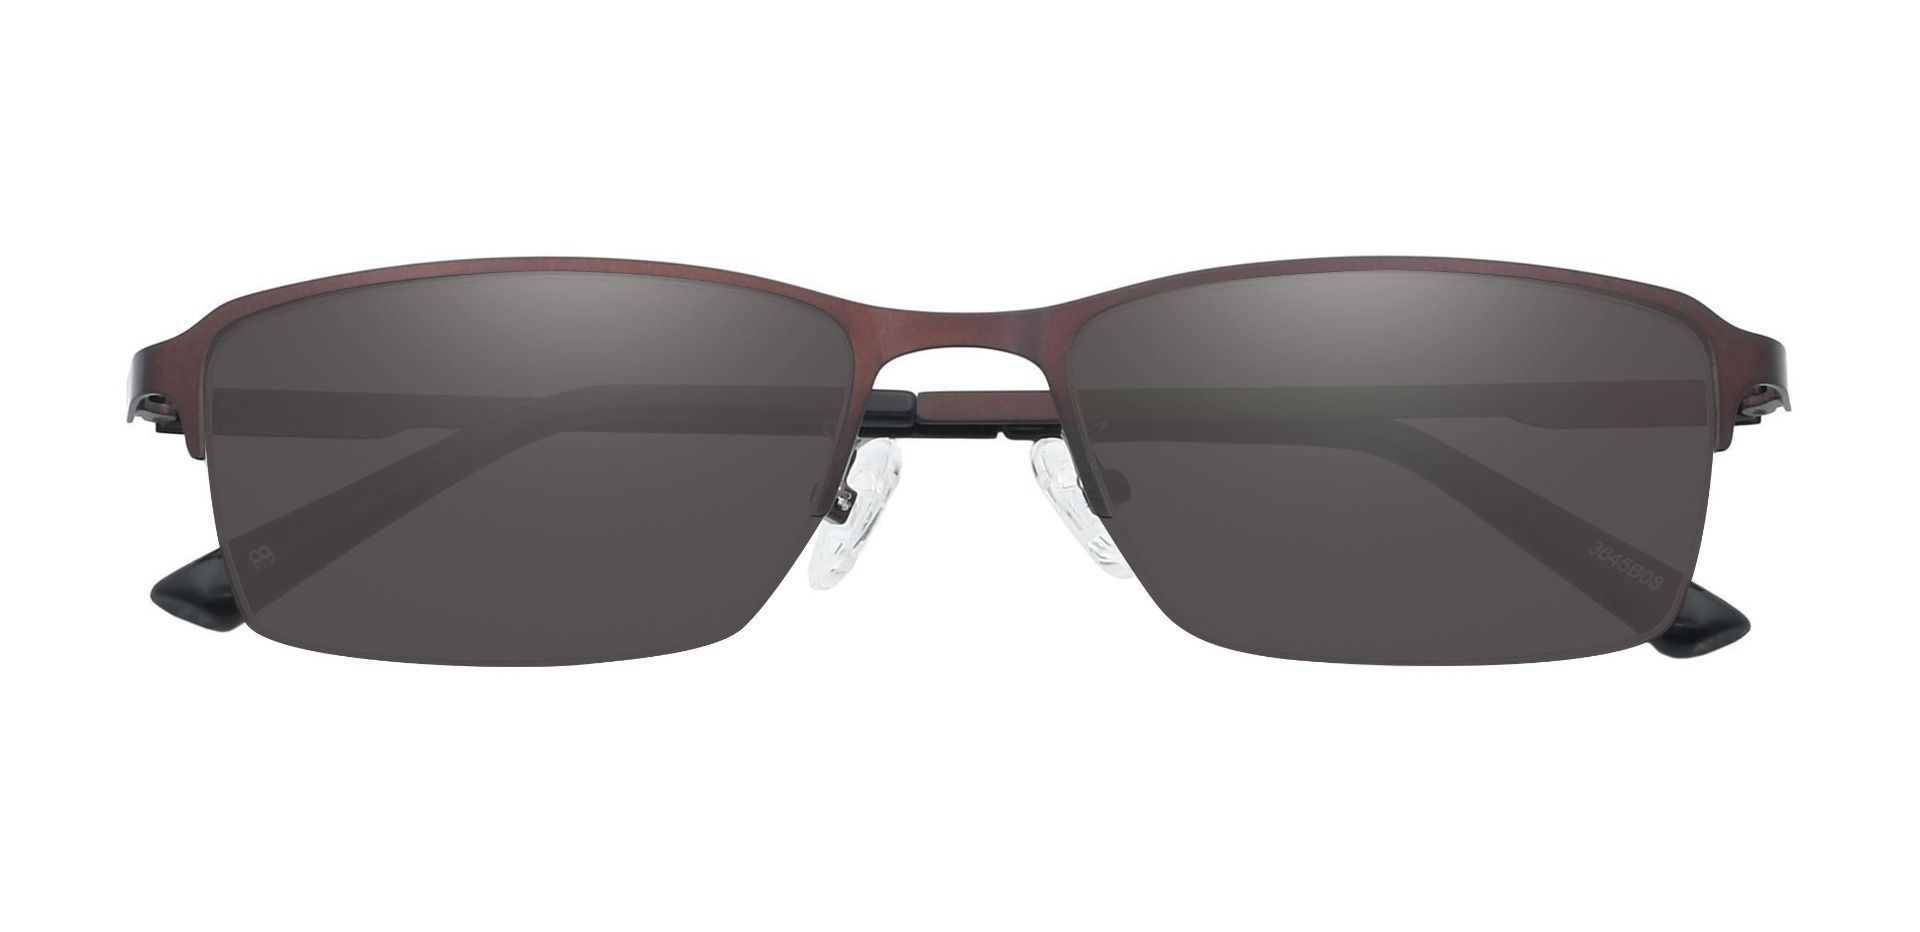 Bennett Rectangle Non-Rx Sunglasses - Brown Frame With Gray Lenses